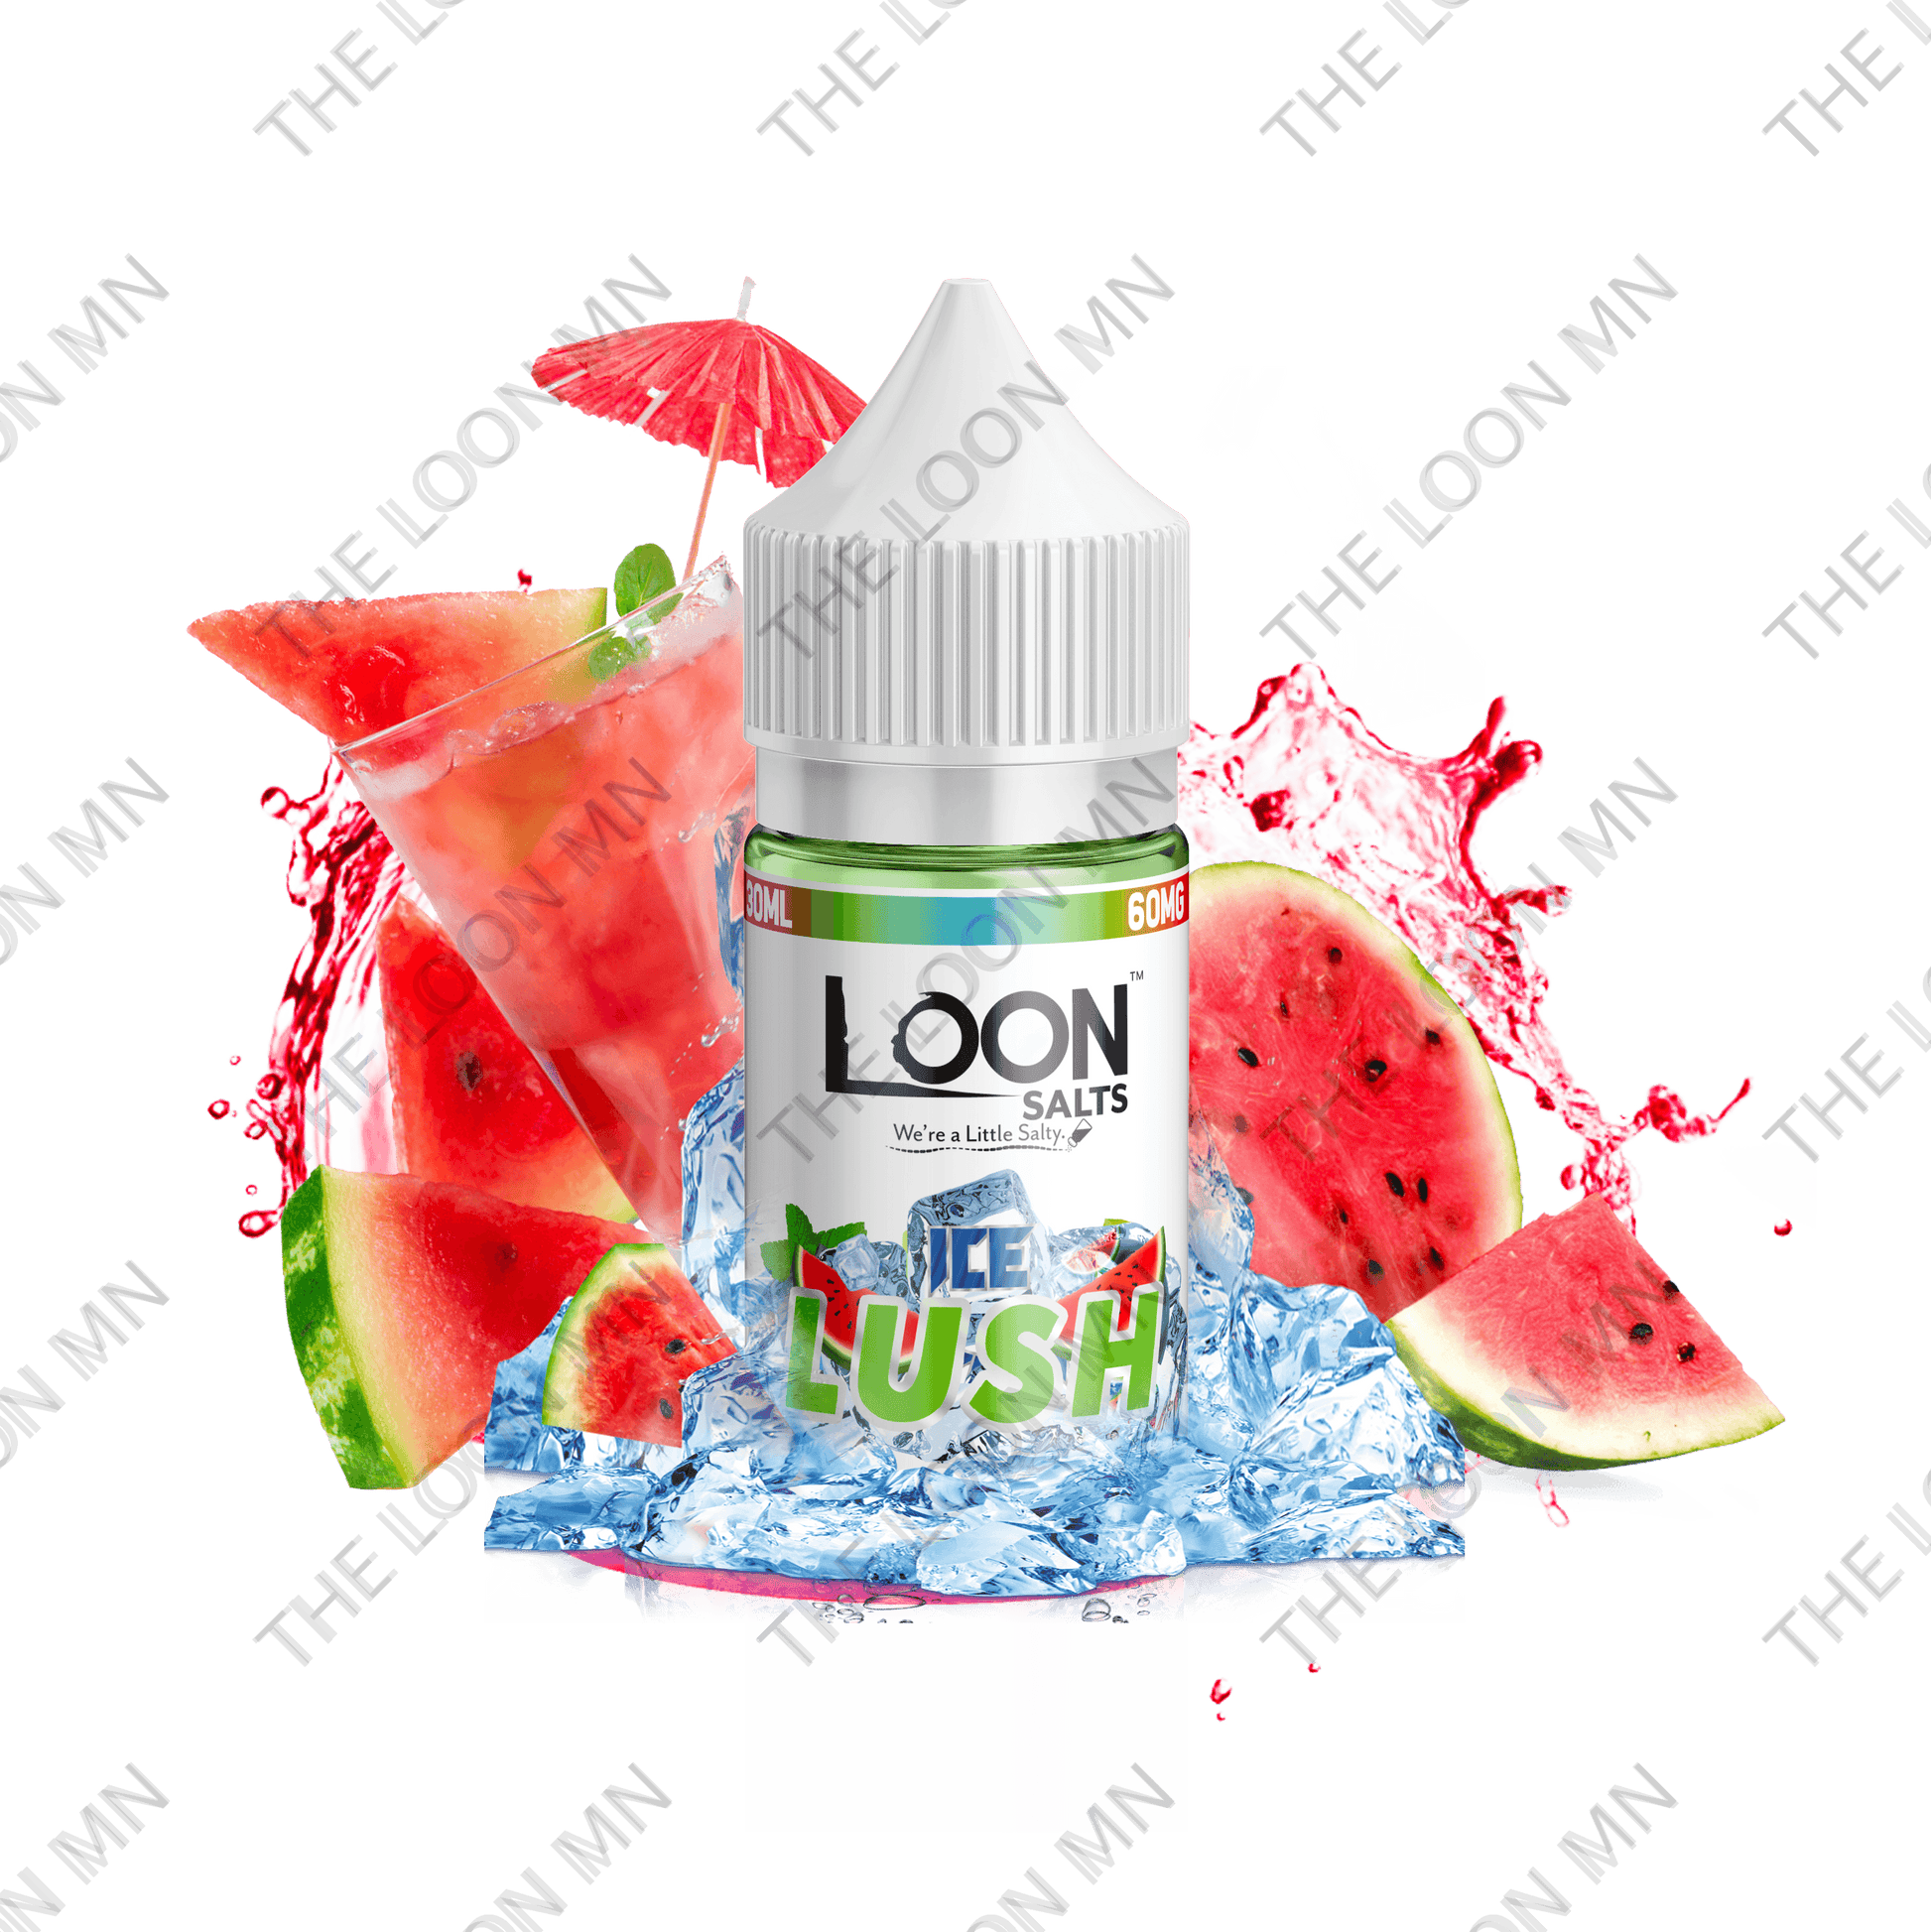 LOON SALTS - ICED LUSH - THE LOON